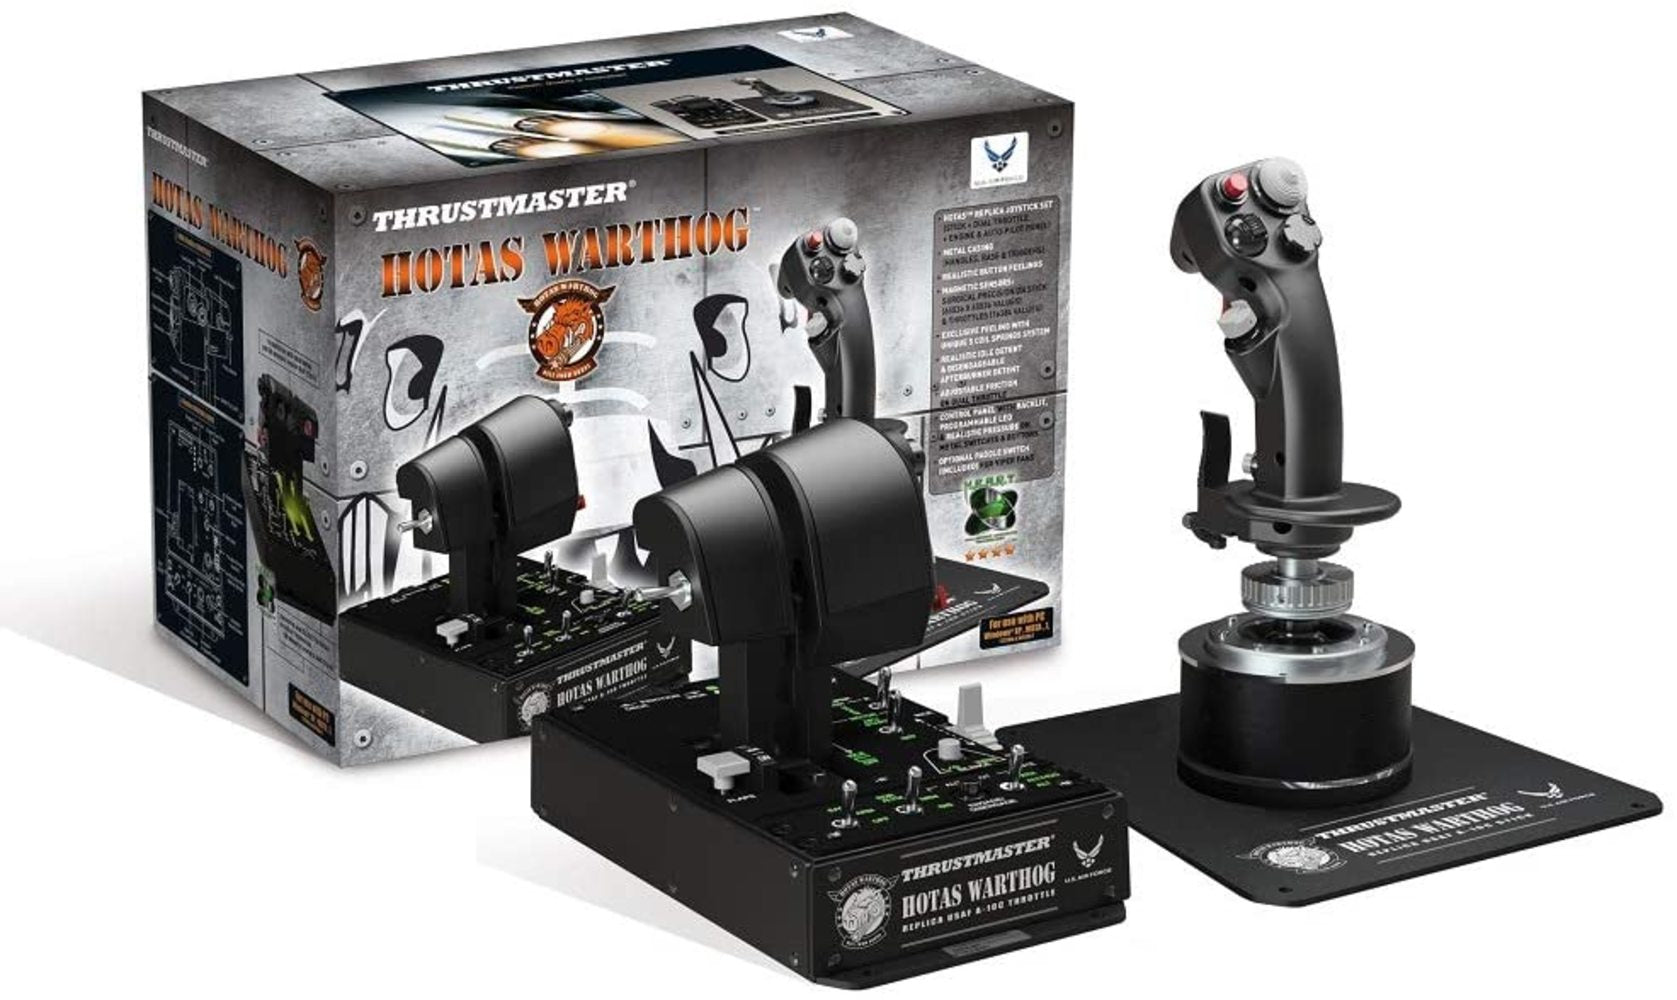 Thrustmaster Hotas Warthog Gaming Joystick for PC TM-2960720